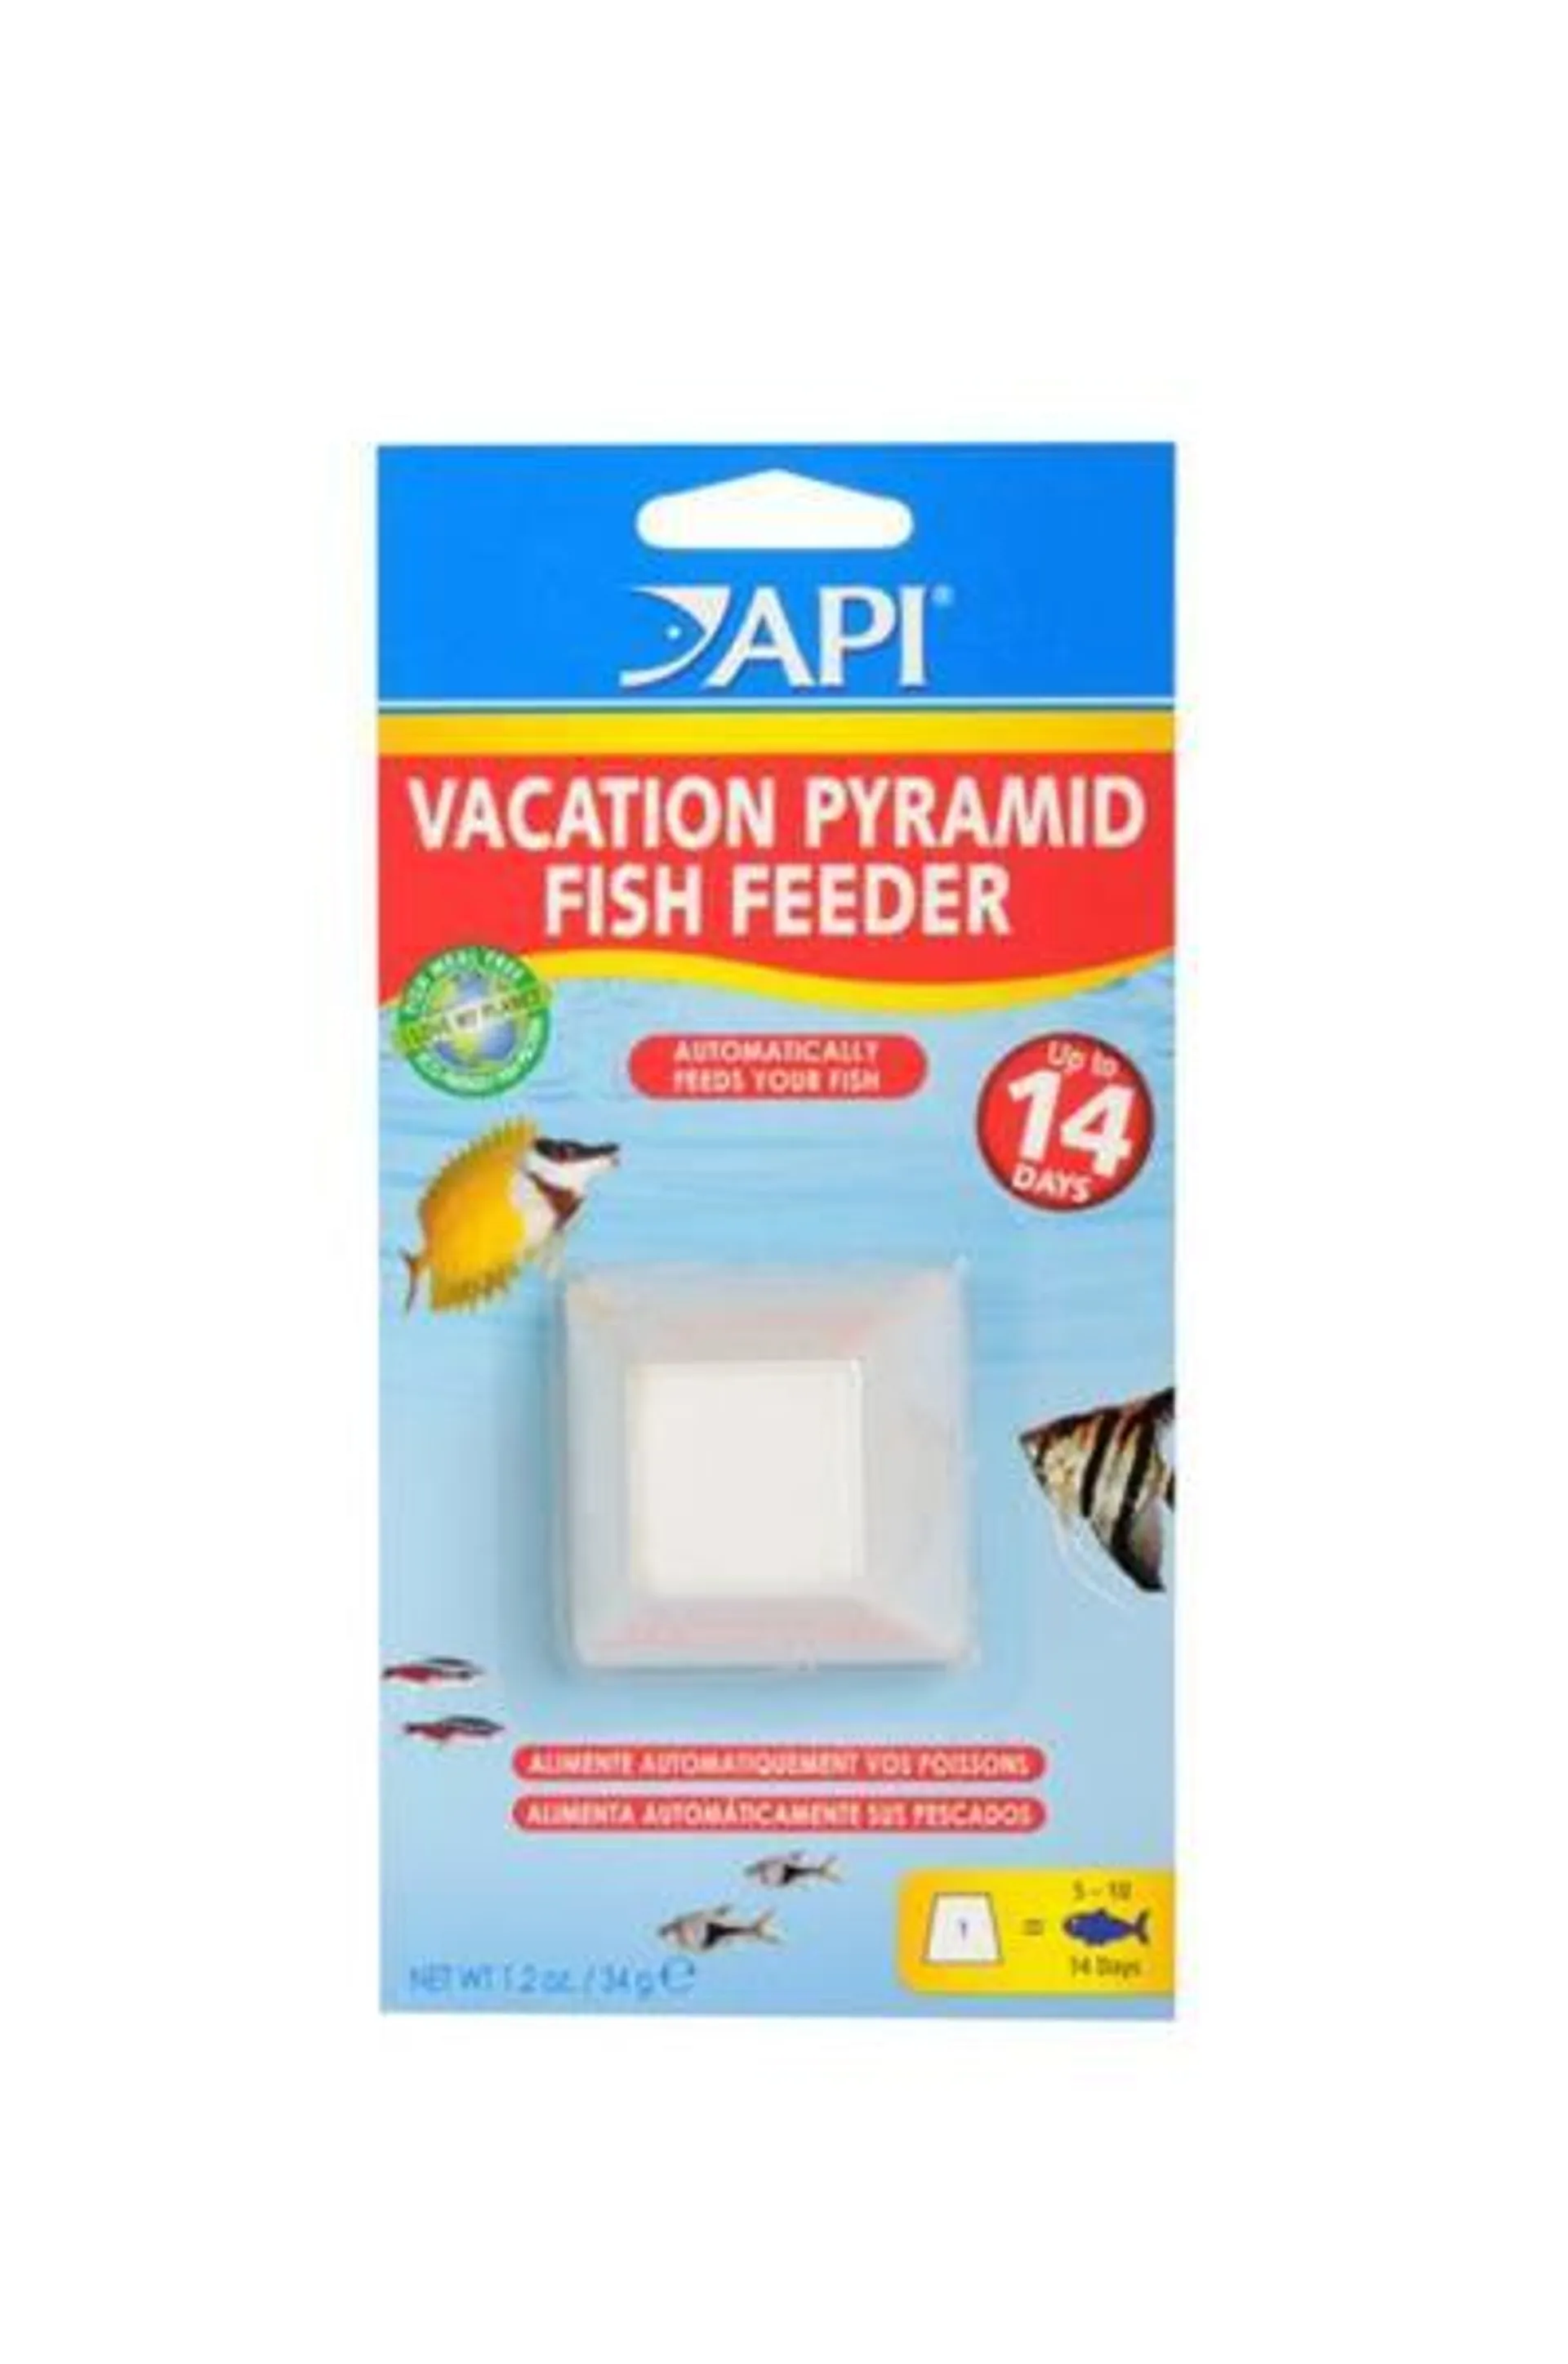 API - 14 Day Pyramid Fish Feeder